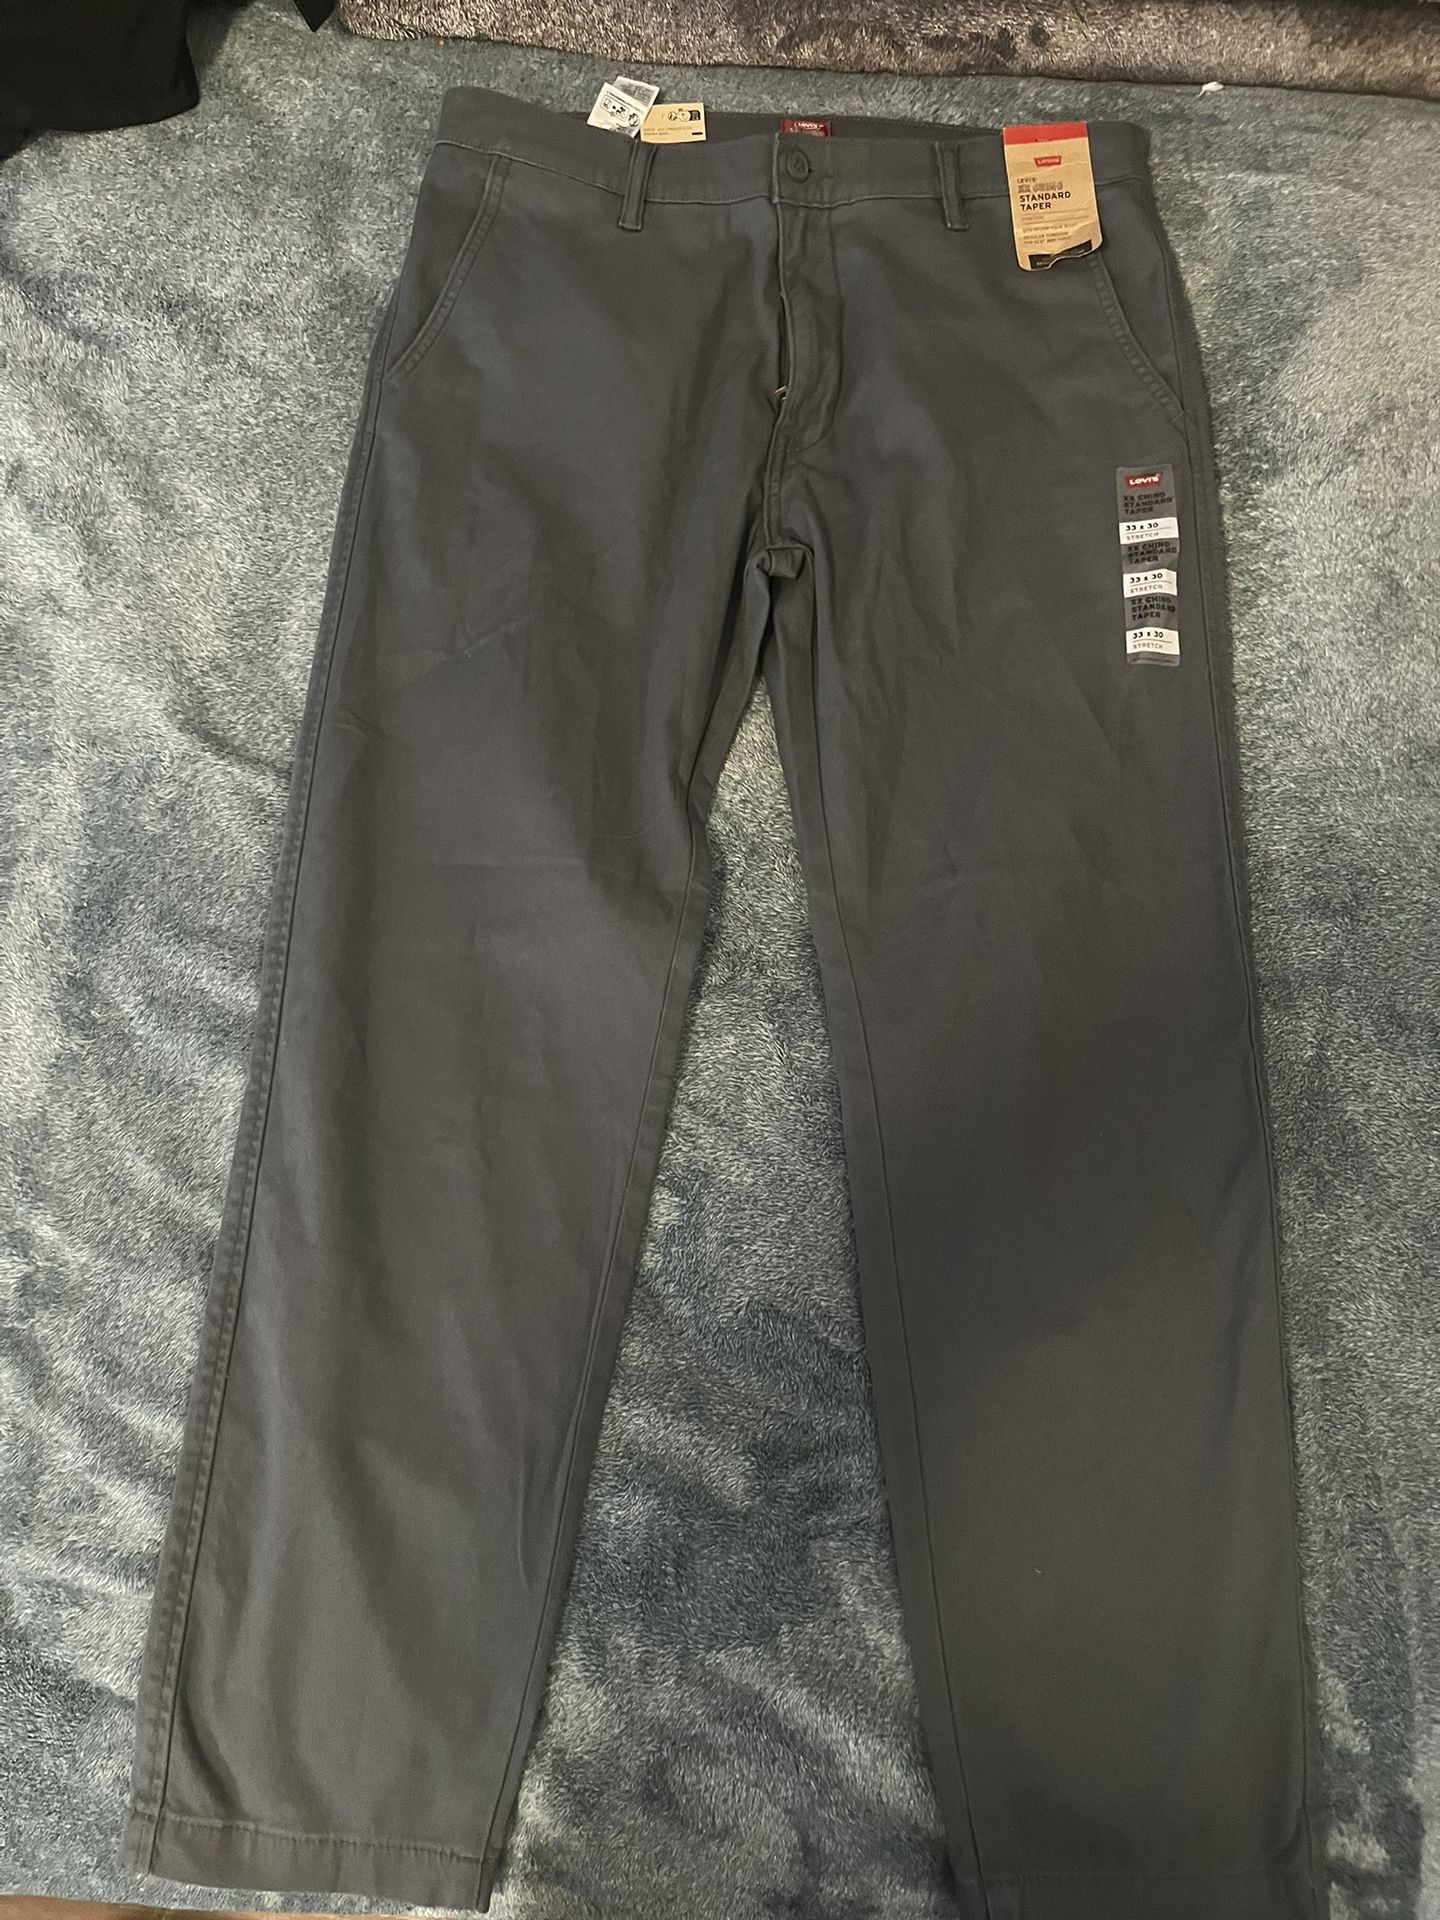 Levi’s Chino Standard Taper Pants For Men’s 